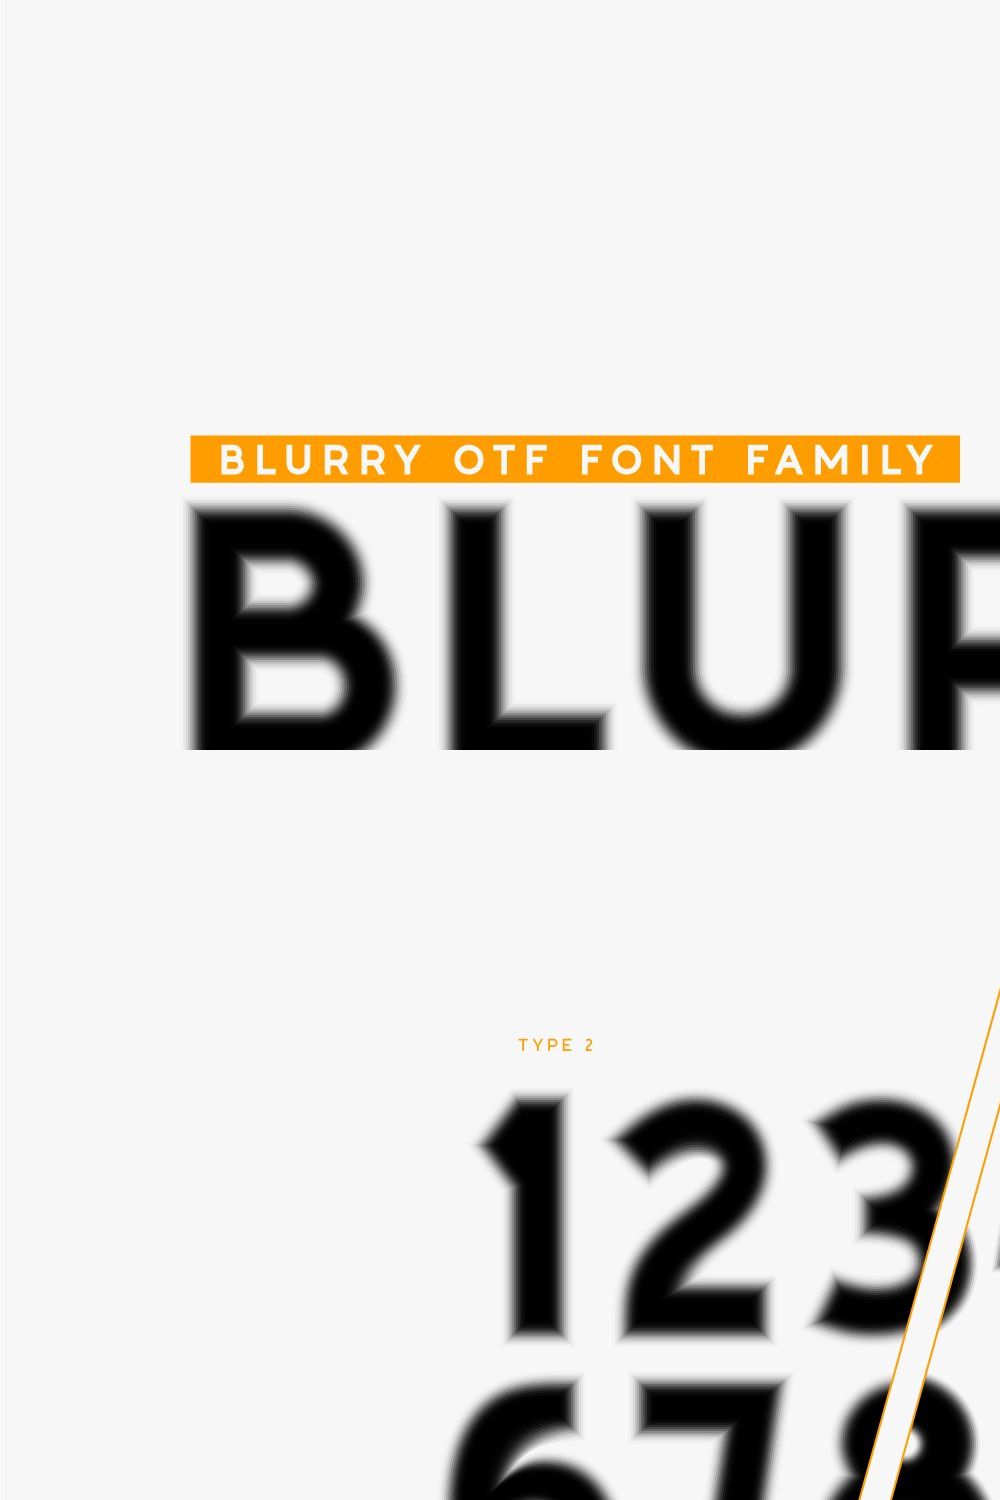 Blureo. OTF-SVG Blurred font family. pinterest preview image.